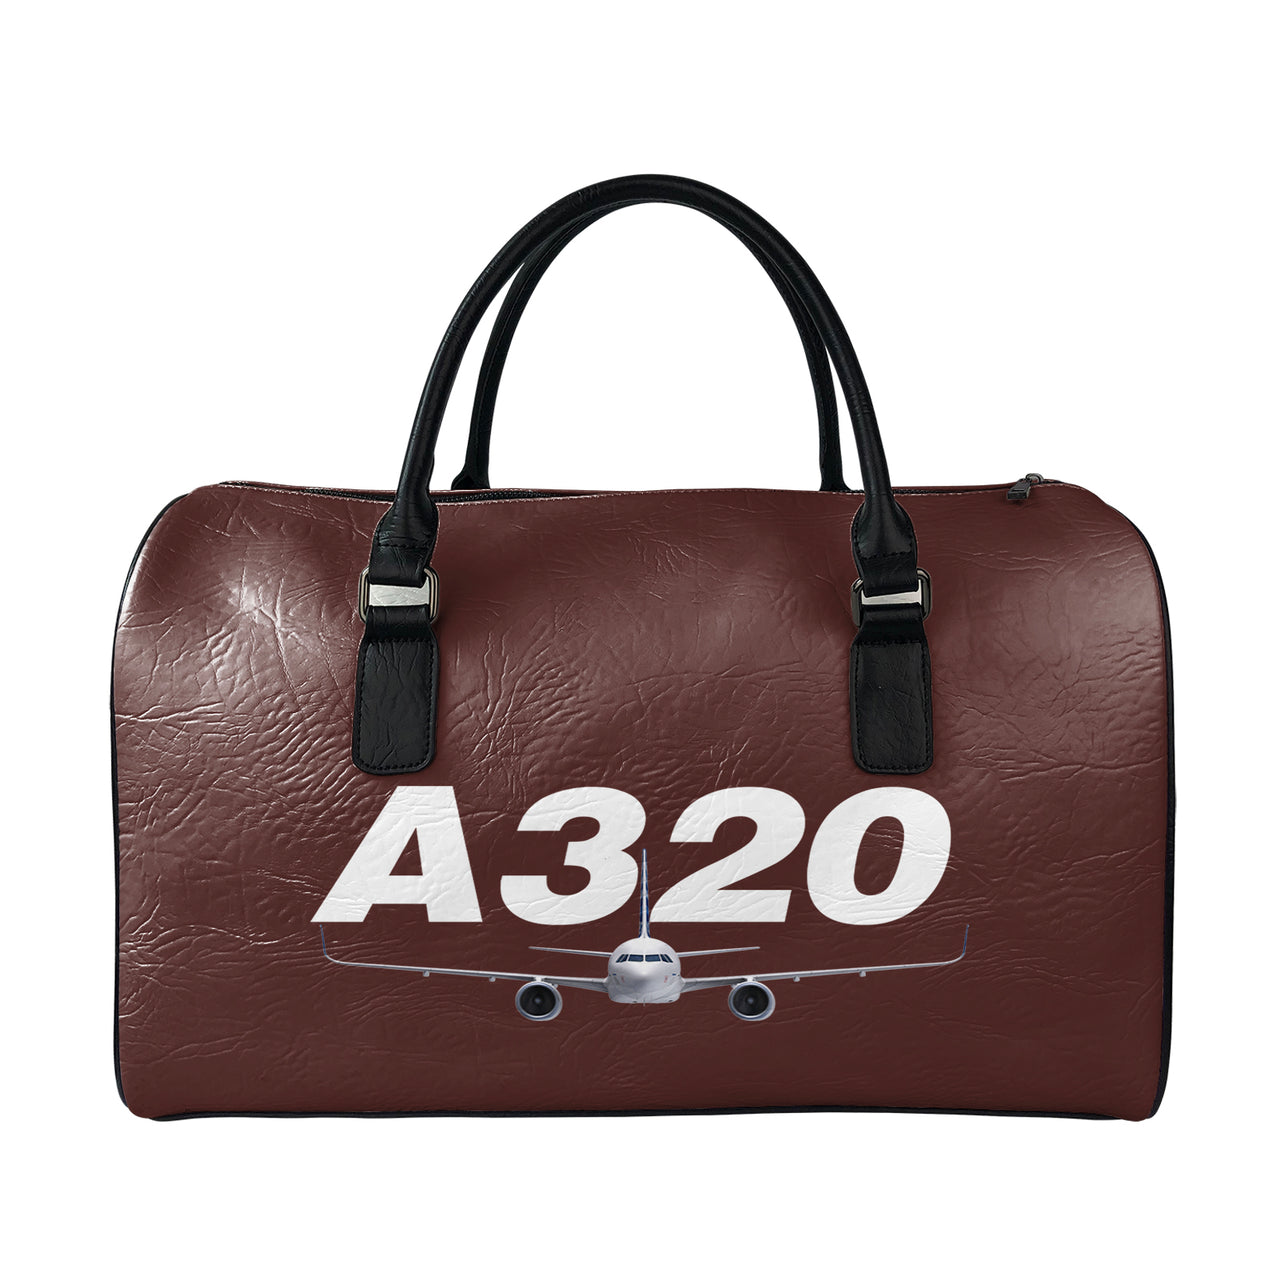 Super Airbus A320 Designed Leather Travel Bag